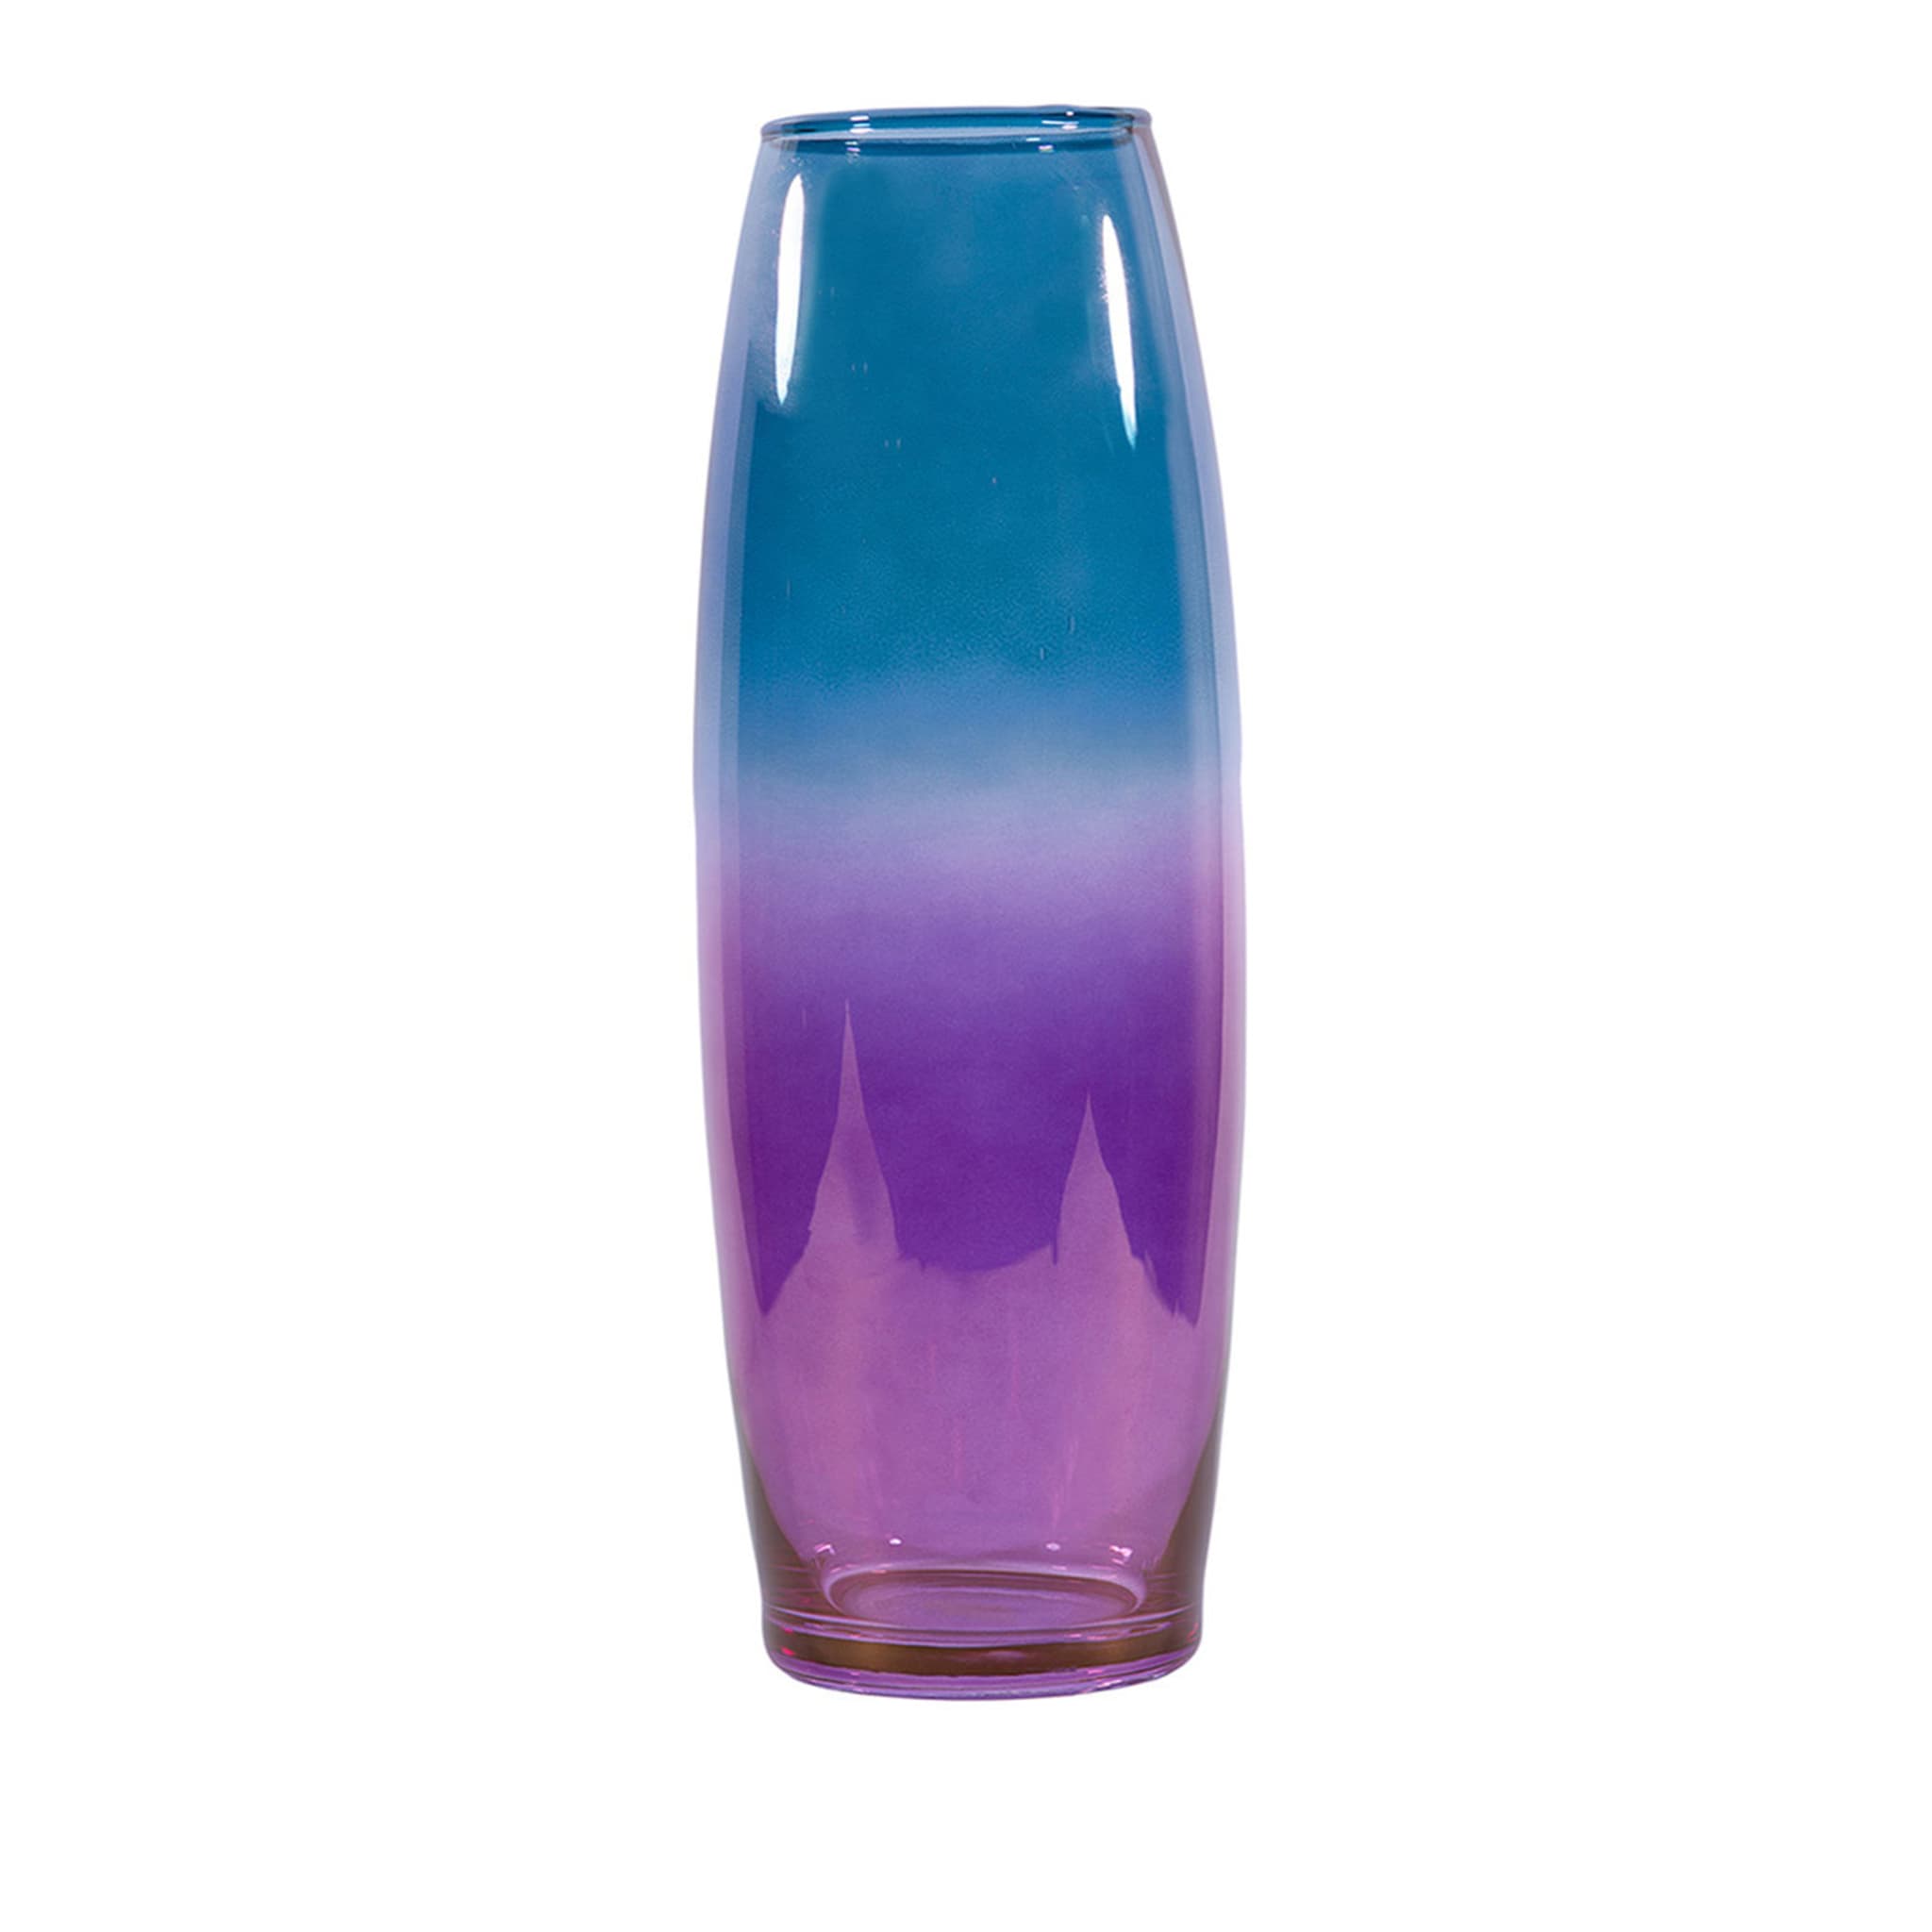 Ogorek Lila-Blau Vase - Hauptansicht